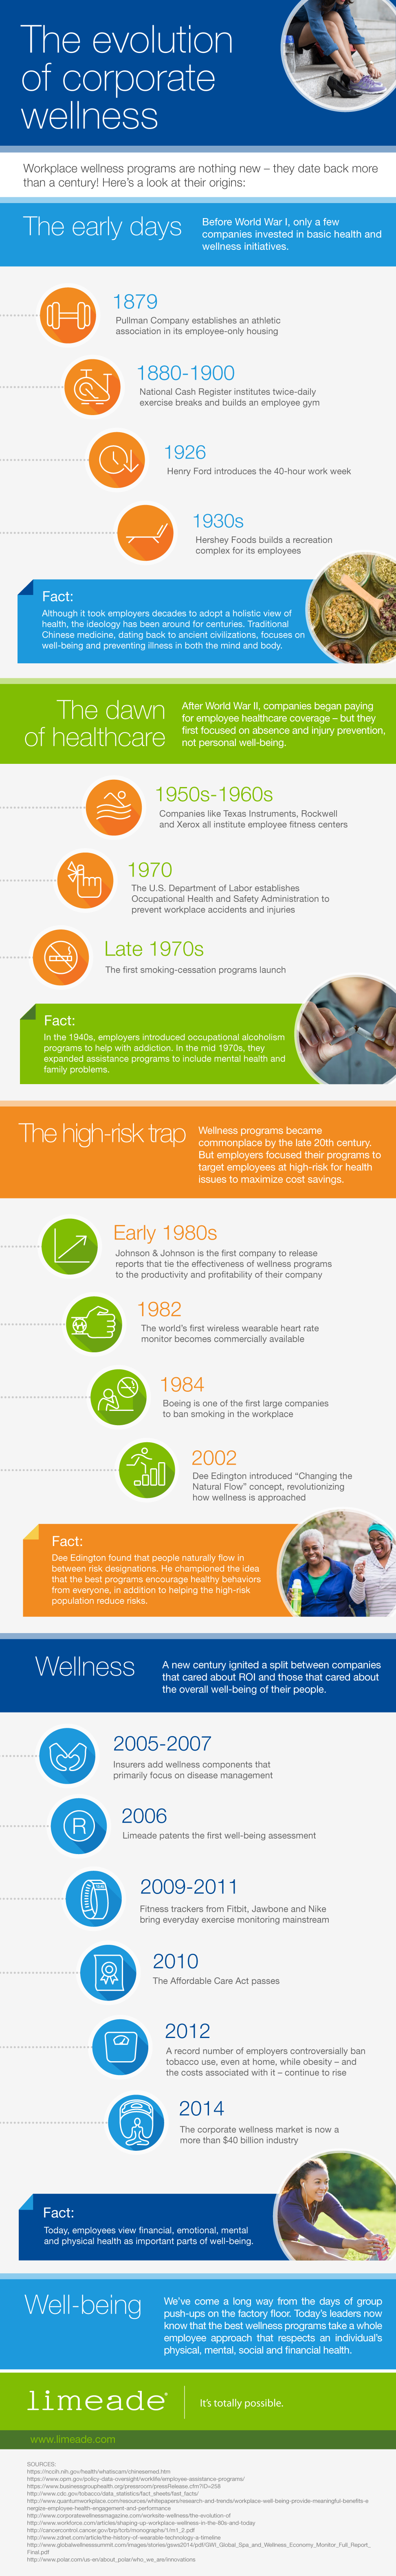 Limeade evolution of corporate wellness 972px - Infographic: Evolution of corporate wellness